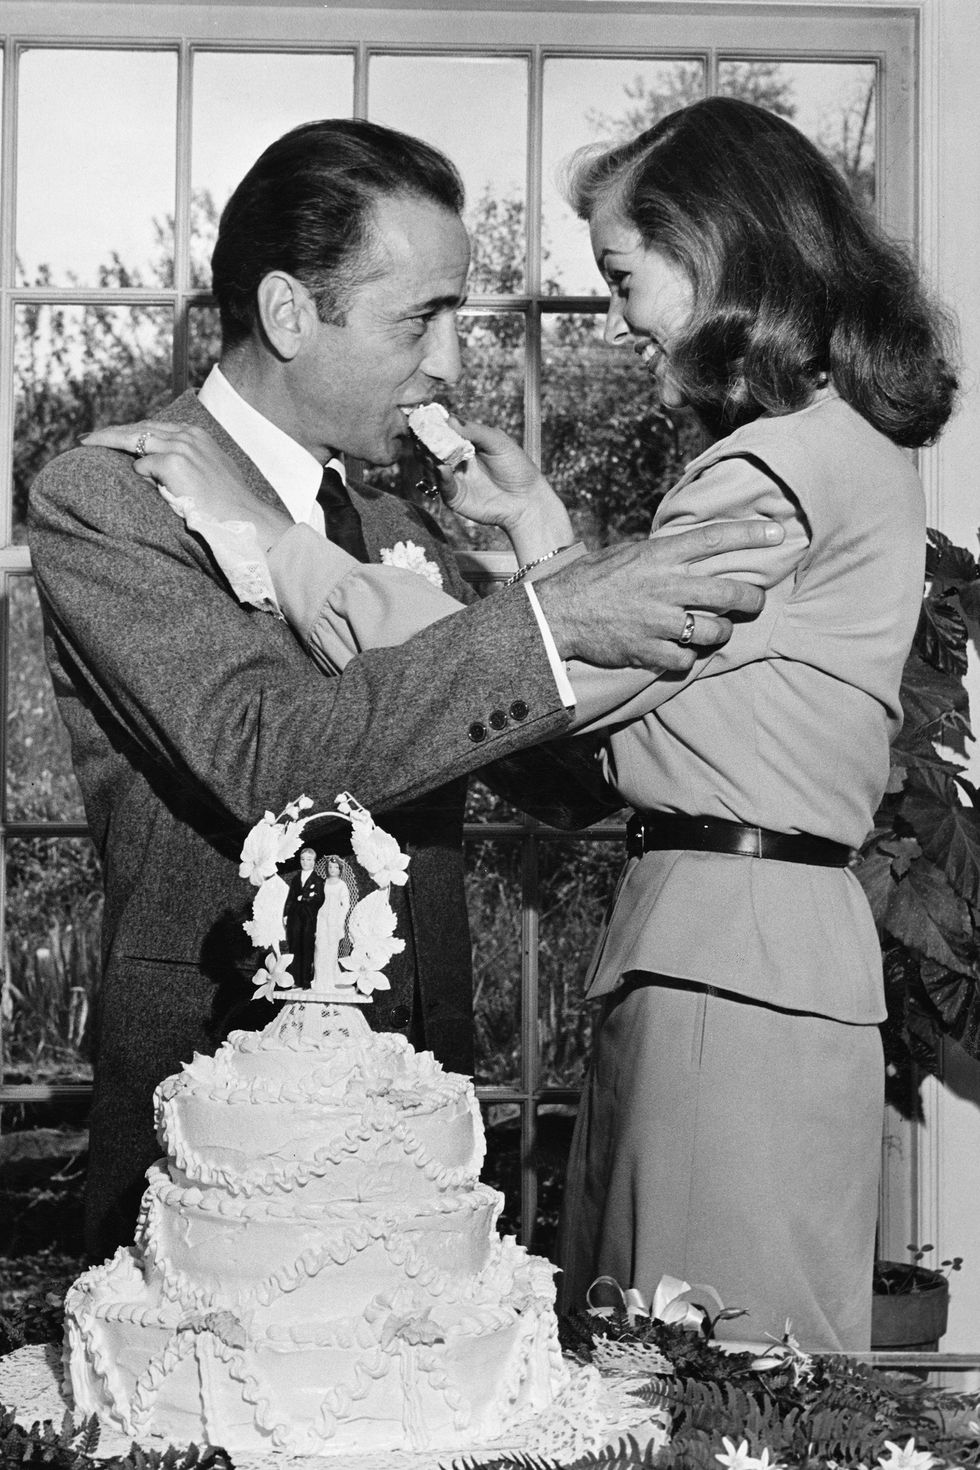 Actress Lauren Bacall feeding cake to husband Humphrey Bogart at their wedding at Louis Bromfield's farm.